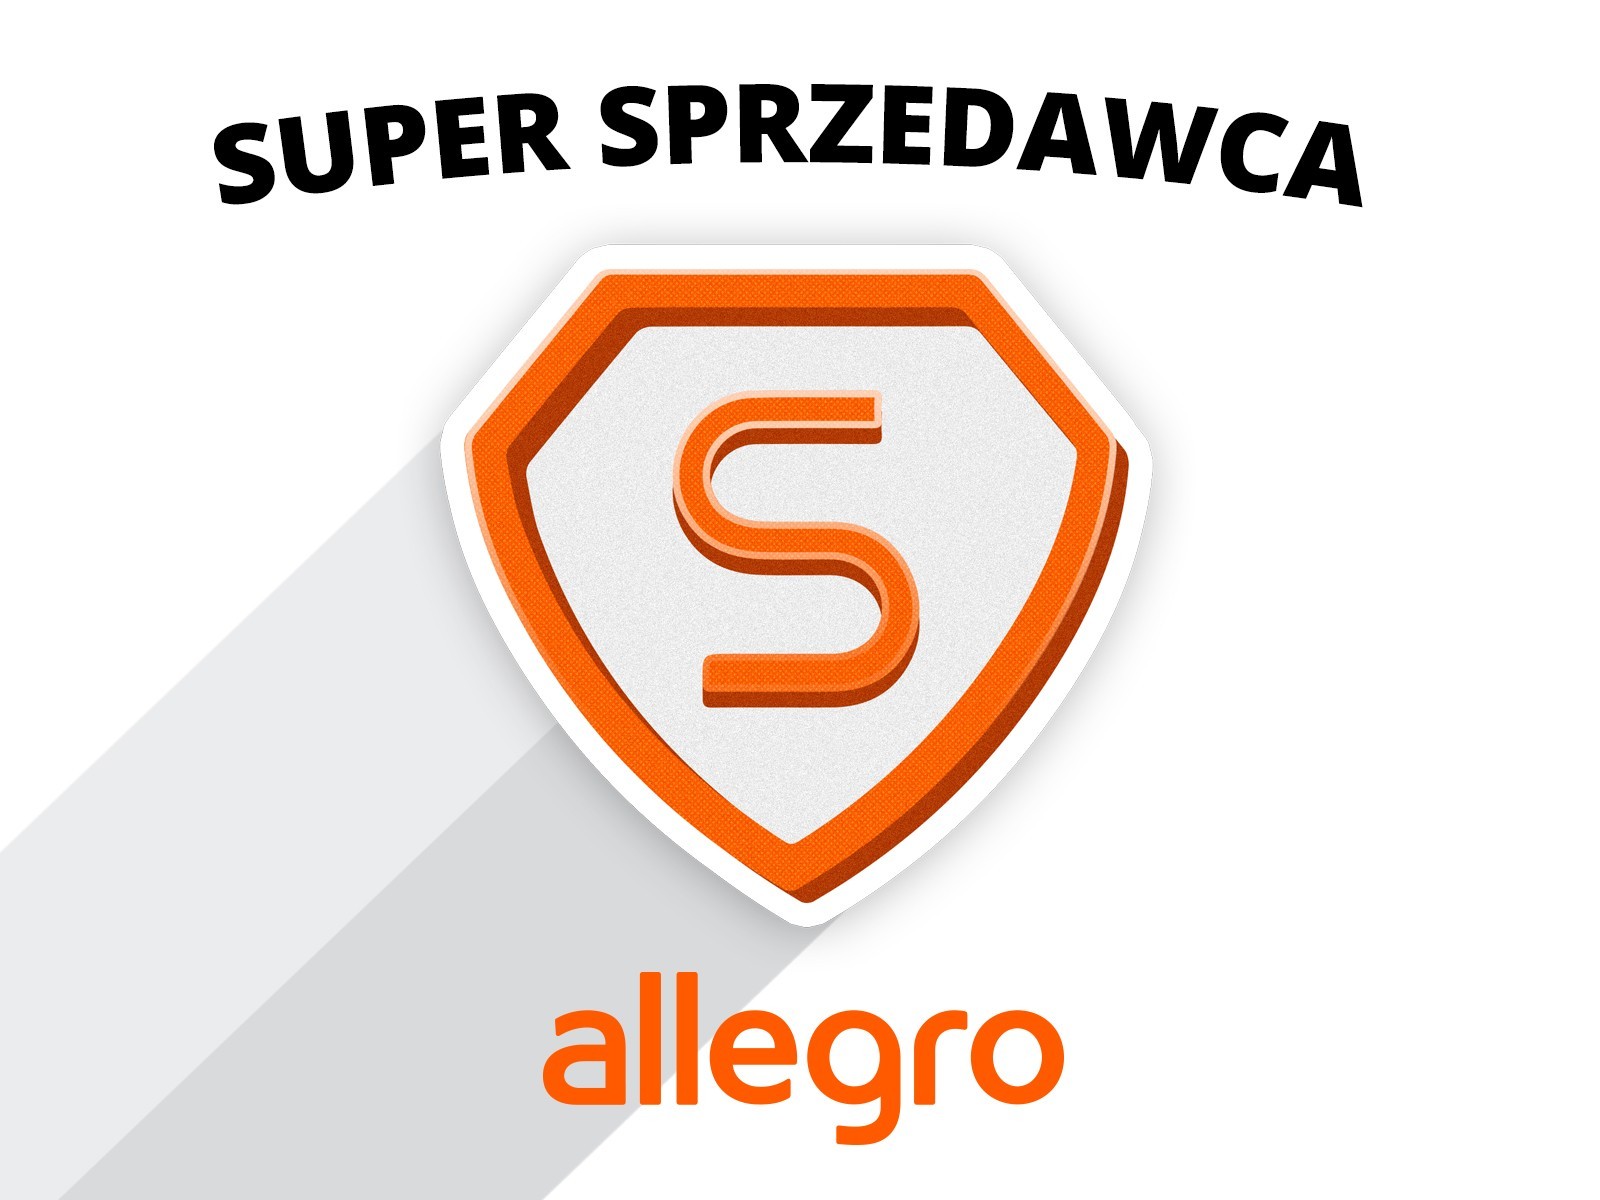 Super sprzedawca Allegro